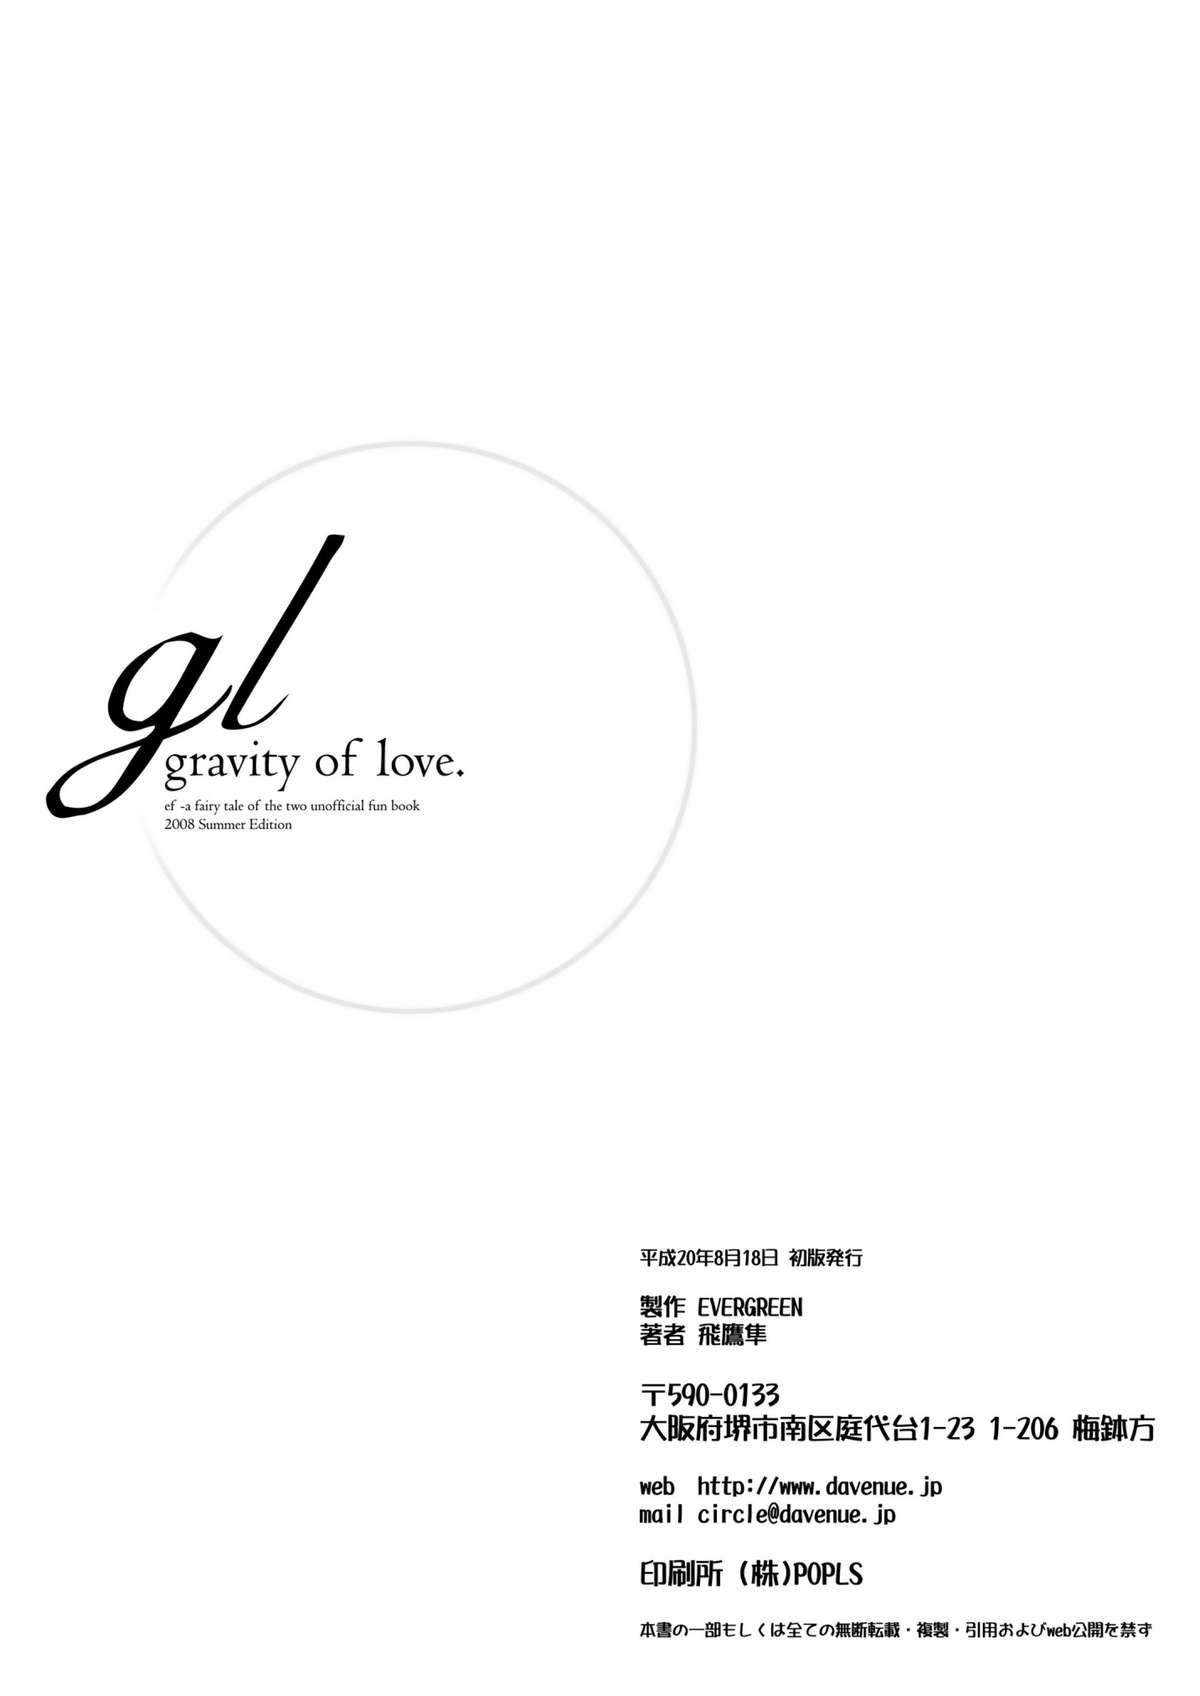 gl-gravity of love 20